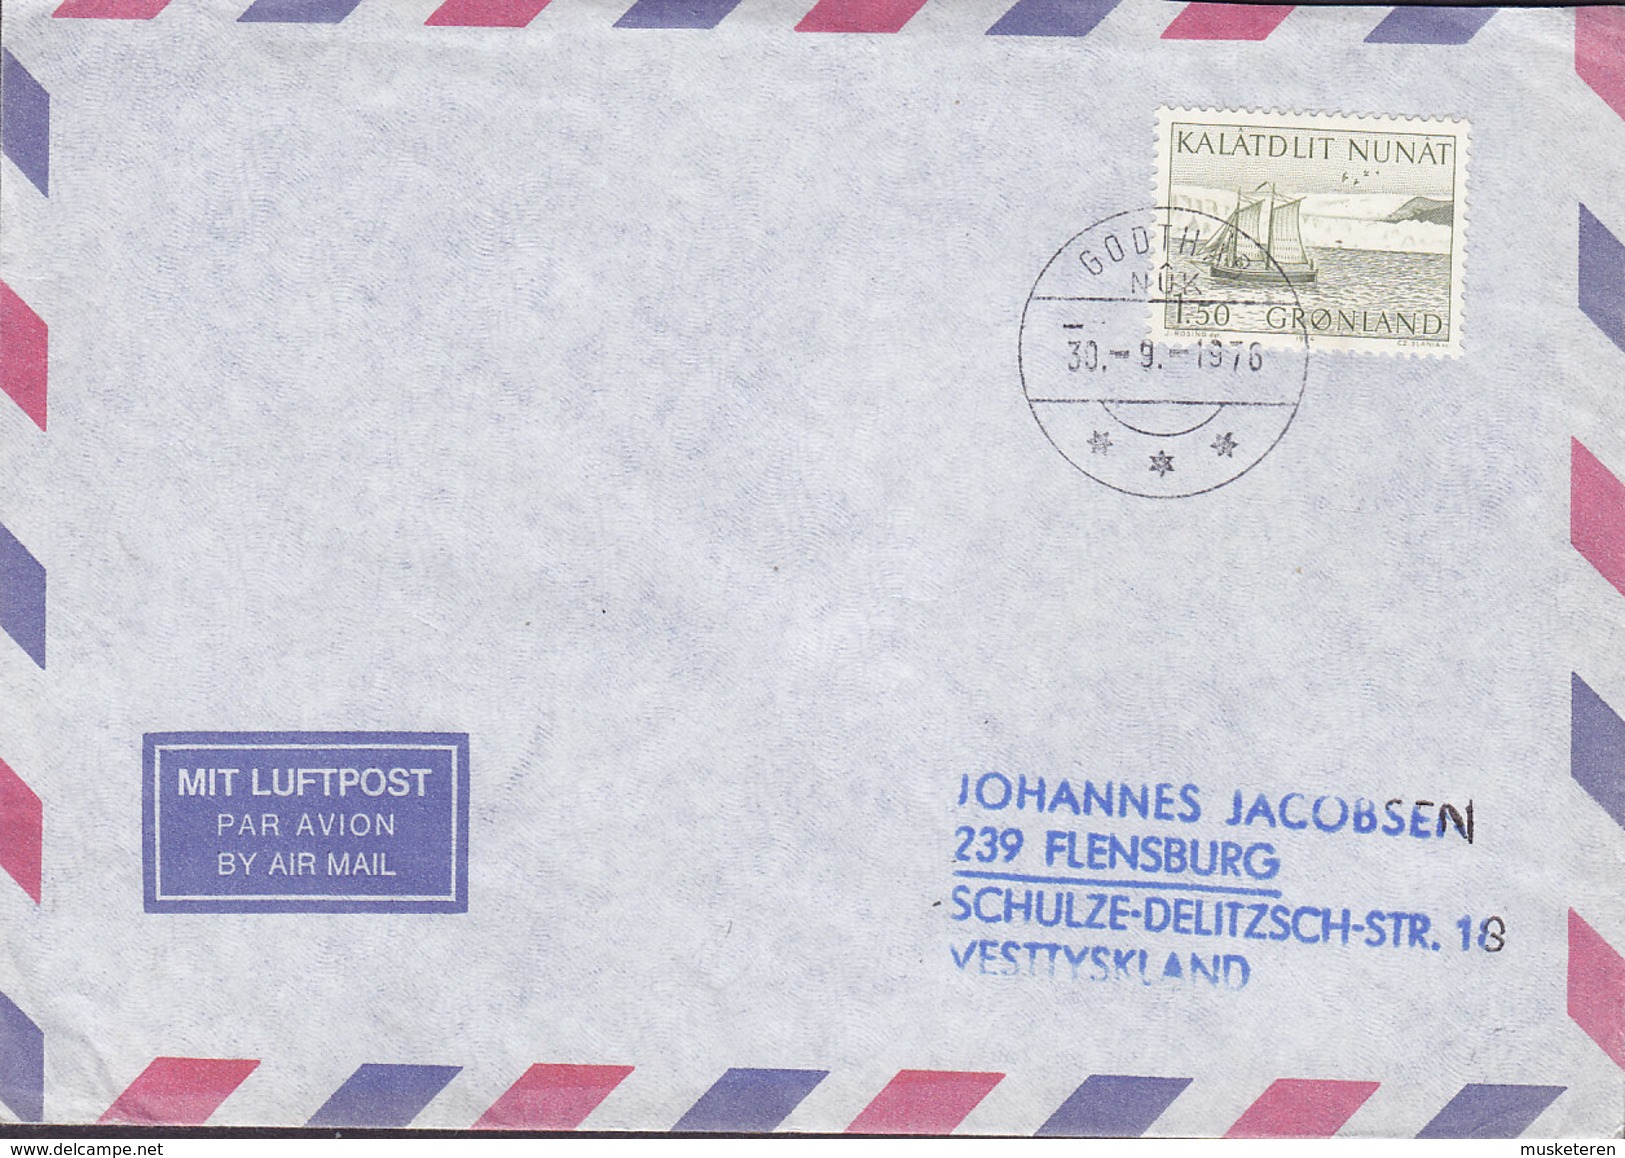 Greenlnd Luftpost Air Mail GODTHÅB Nuuk 1976 Cover Brief FLENSBURG Germany (Cz. Slania) Stamp - Cartas & Documentos